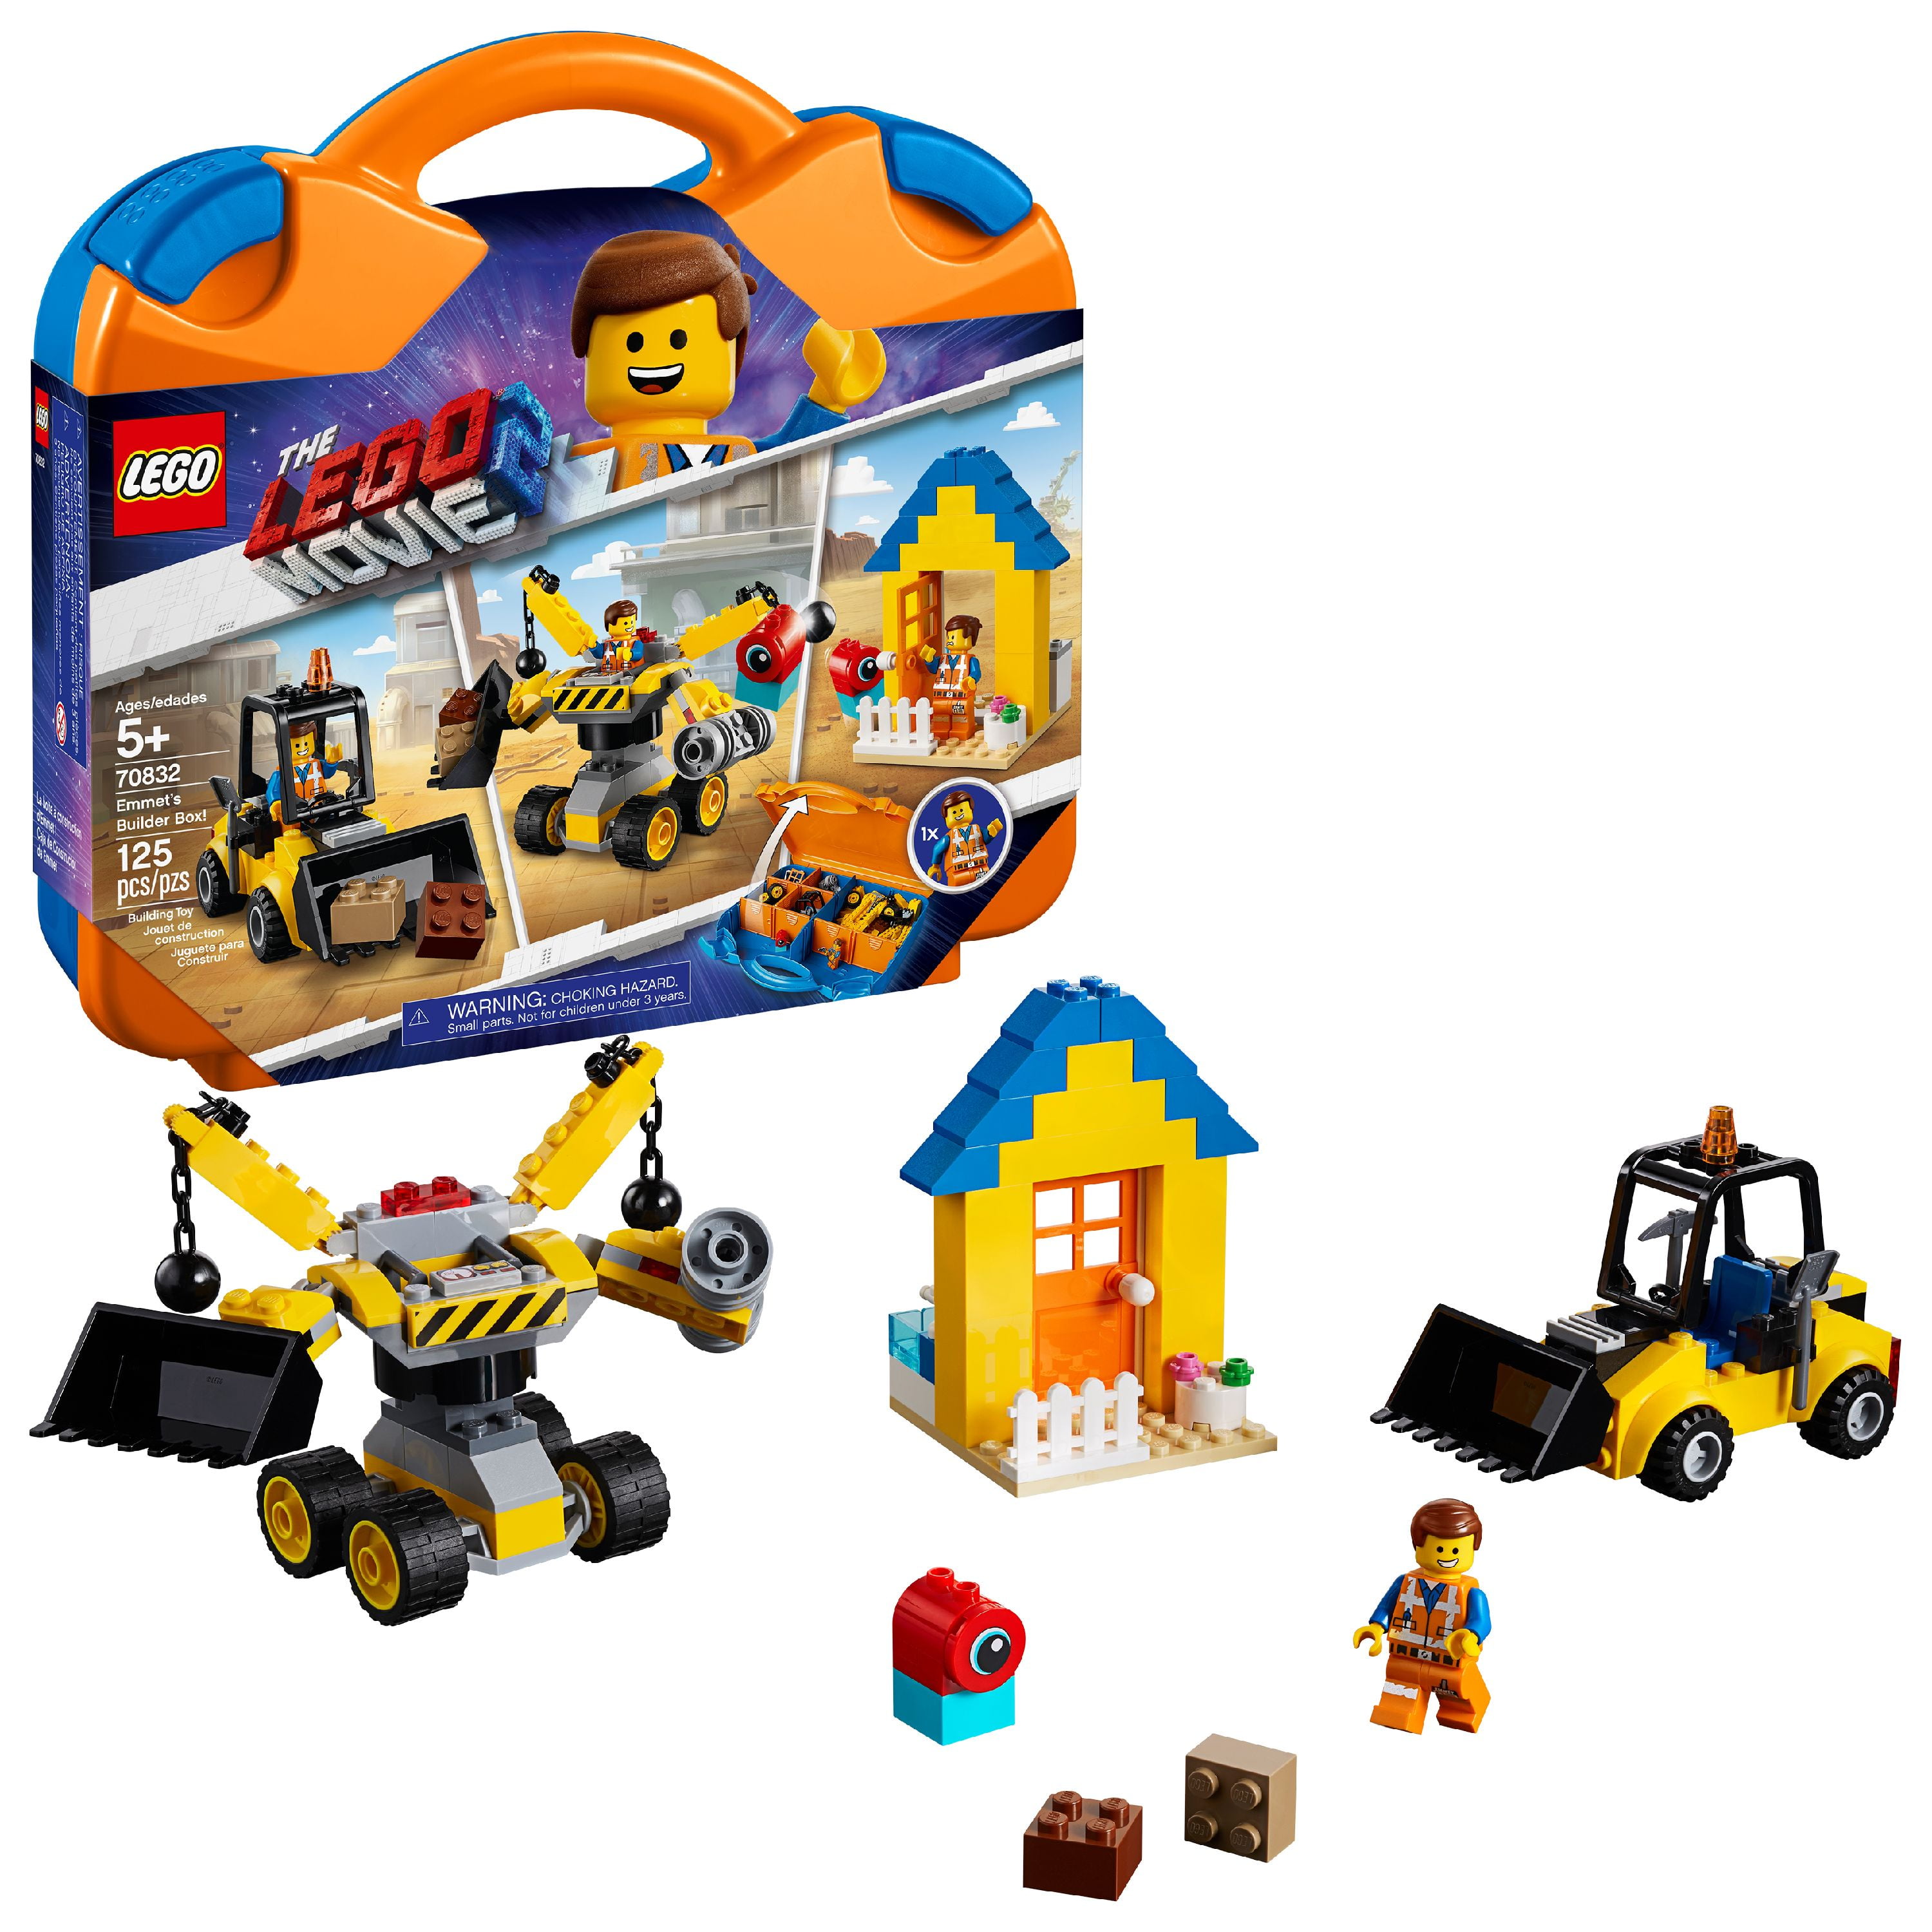 LEGO Movie Emmet's Builder Box! 70832 - Walmart.com